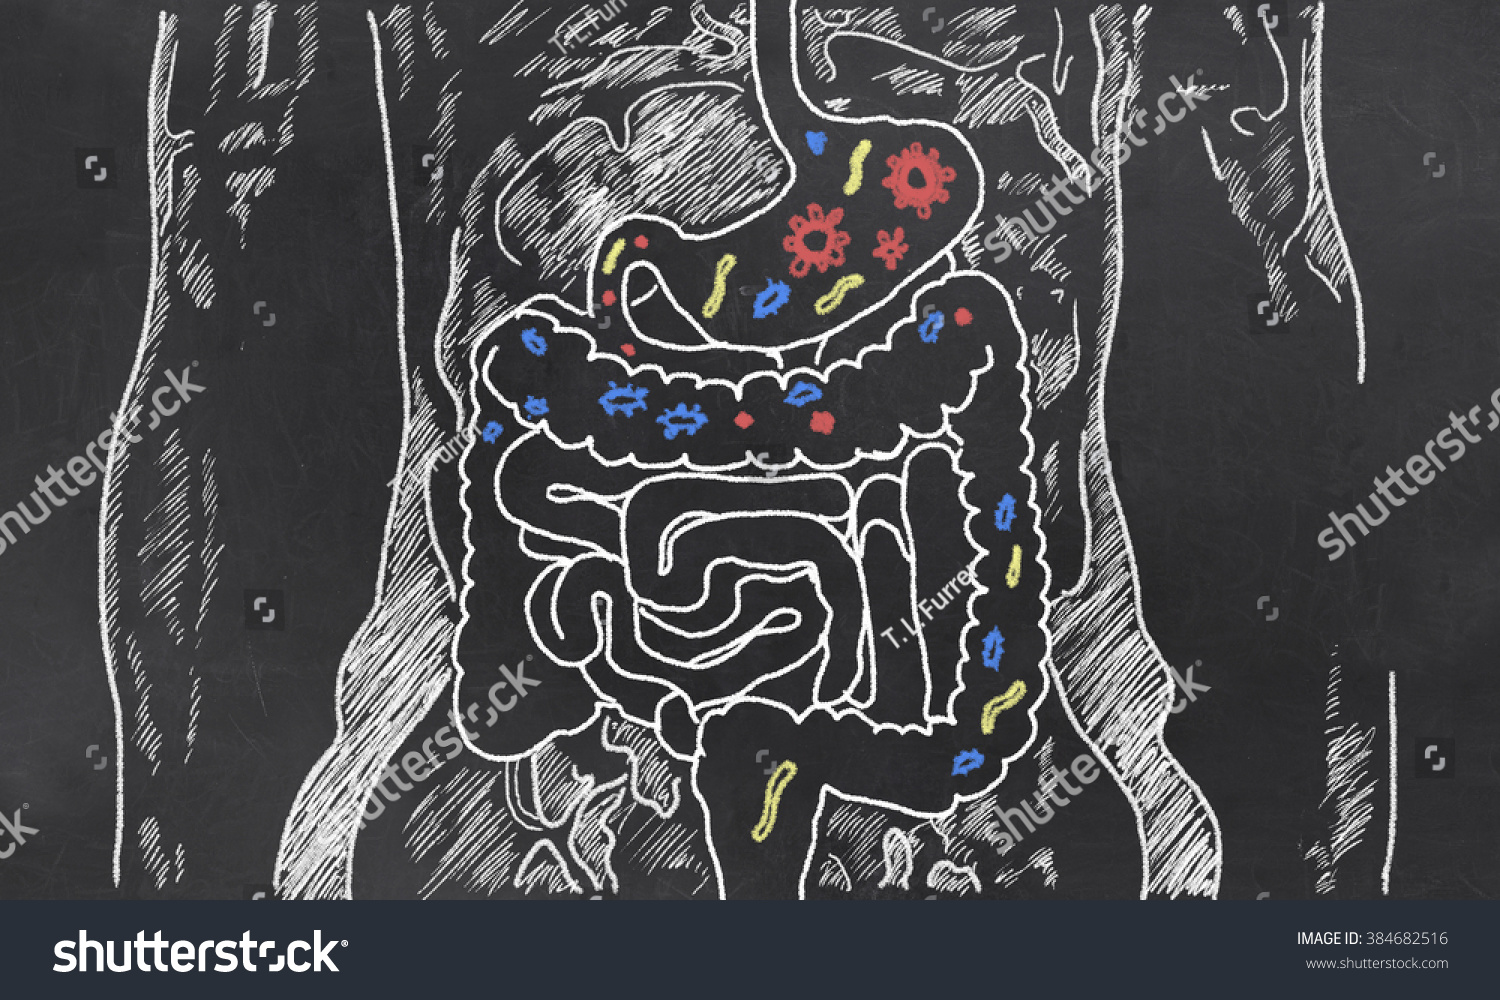 Intestines with Gut Bacteria on Blackboard #384682516